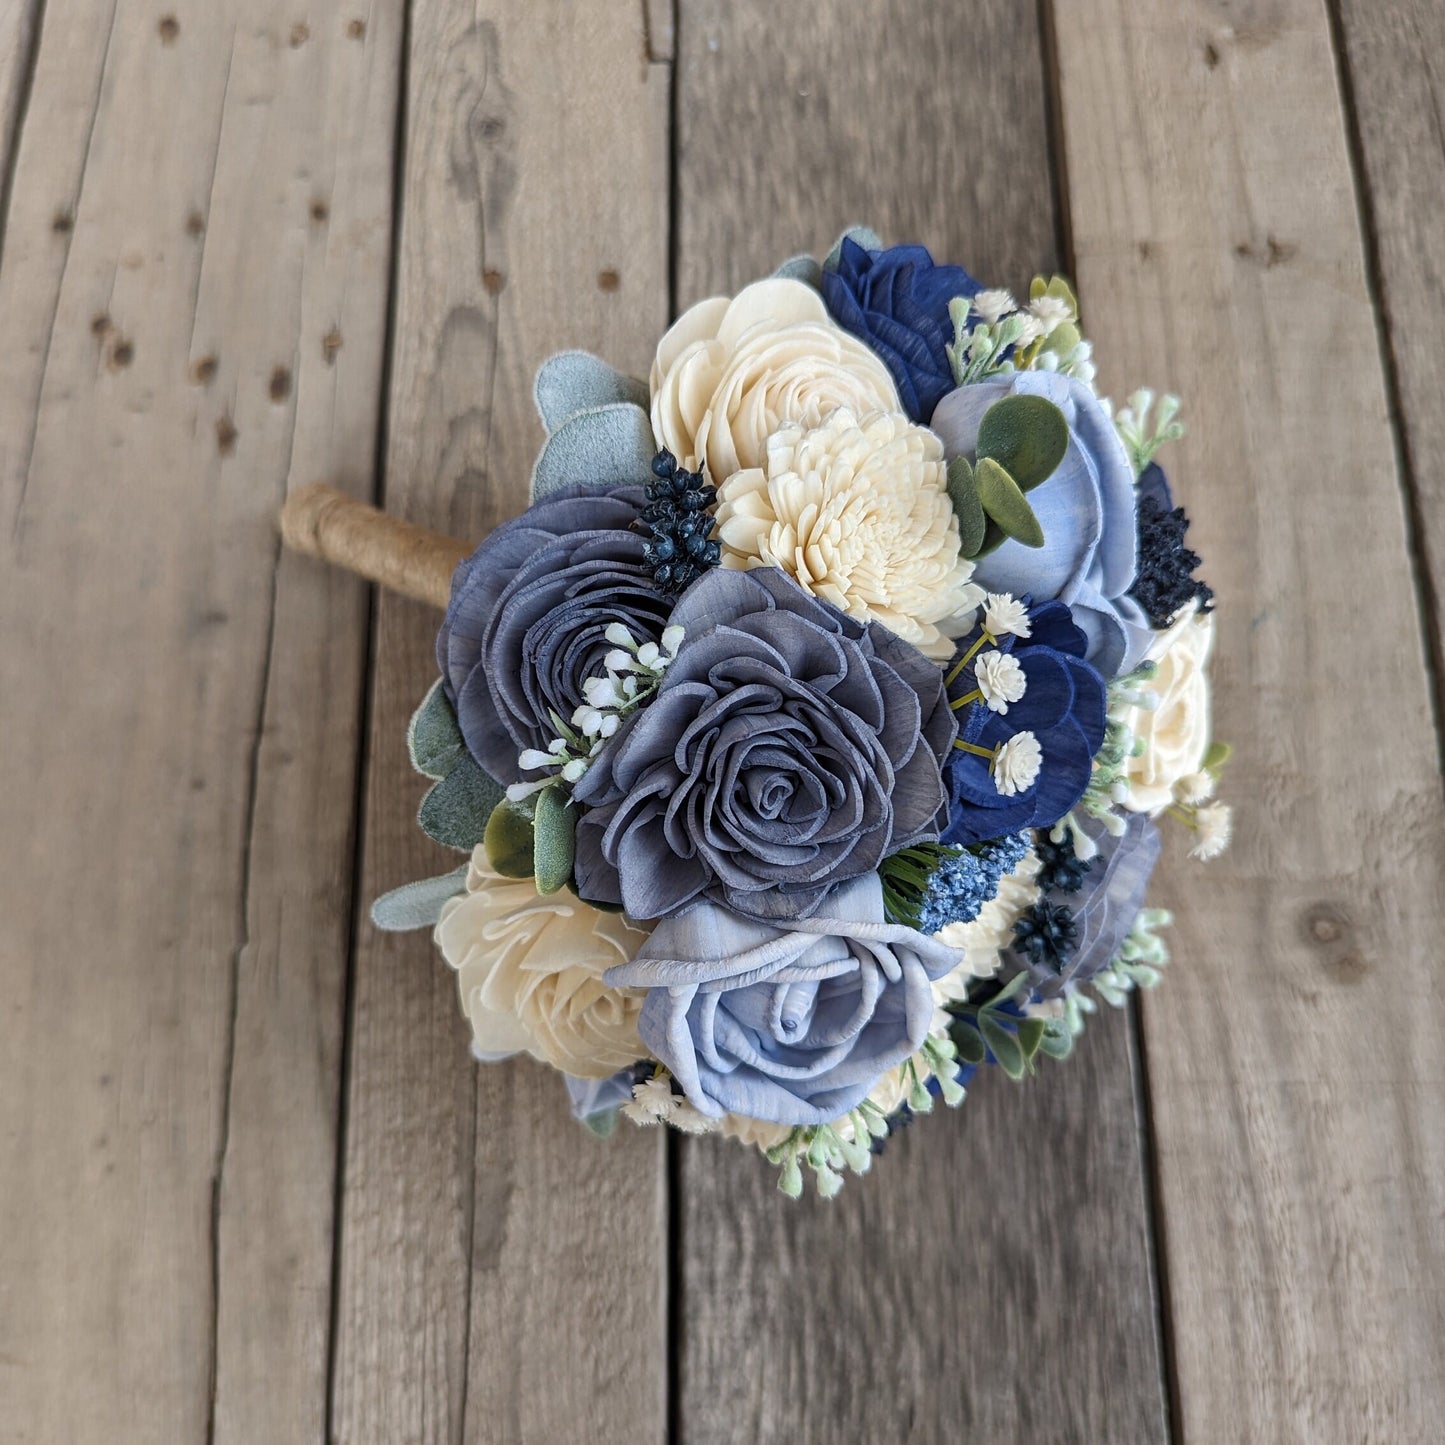 Artificial Blue Wedding Bouquet with Sola Wood Flowers, Wooden Flower Bouquet, Royal Blue Bridal Bouquet, Dusty Blue Bridesmaid Flowers